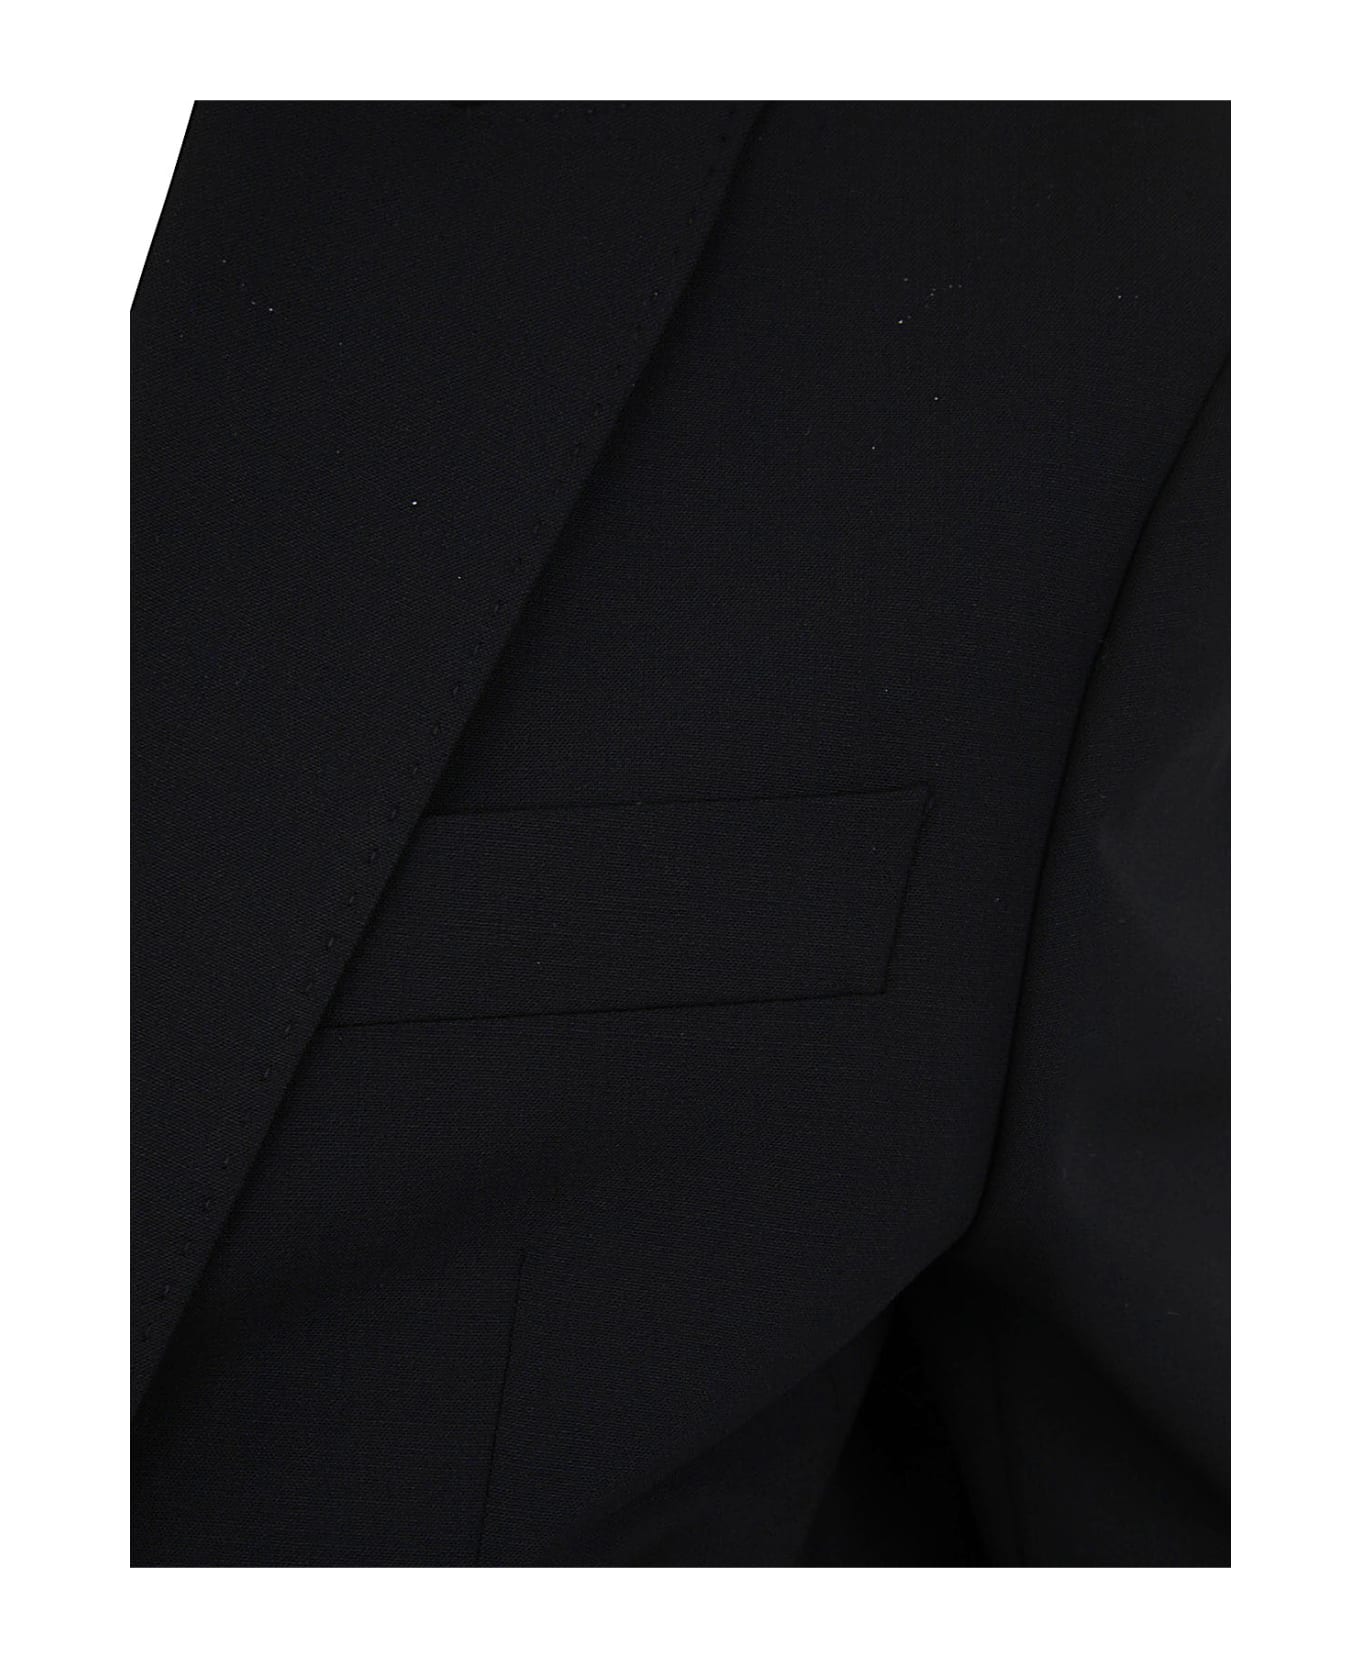 Dsquared2 Tokyo Suit - Black スーツ